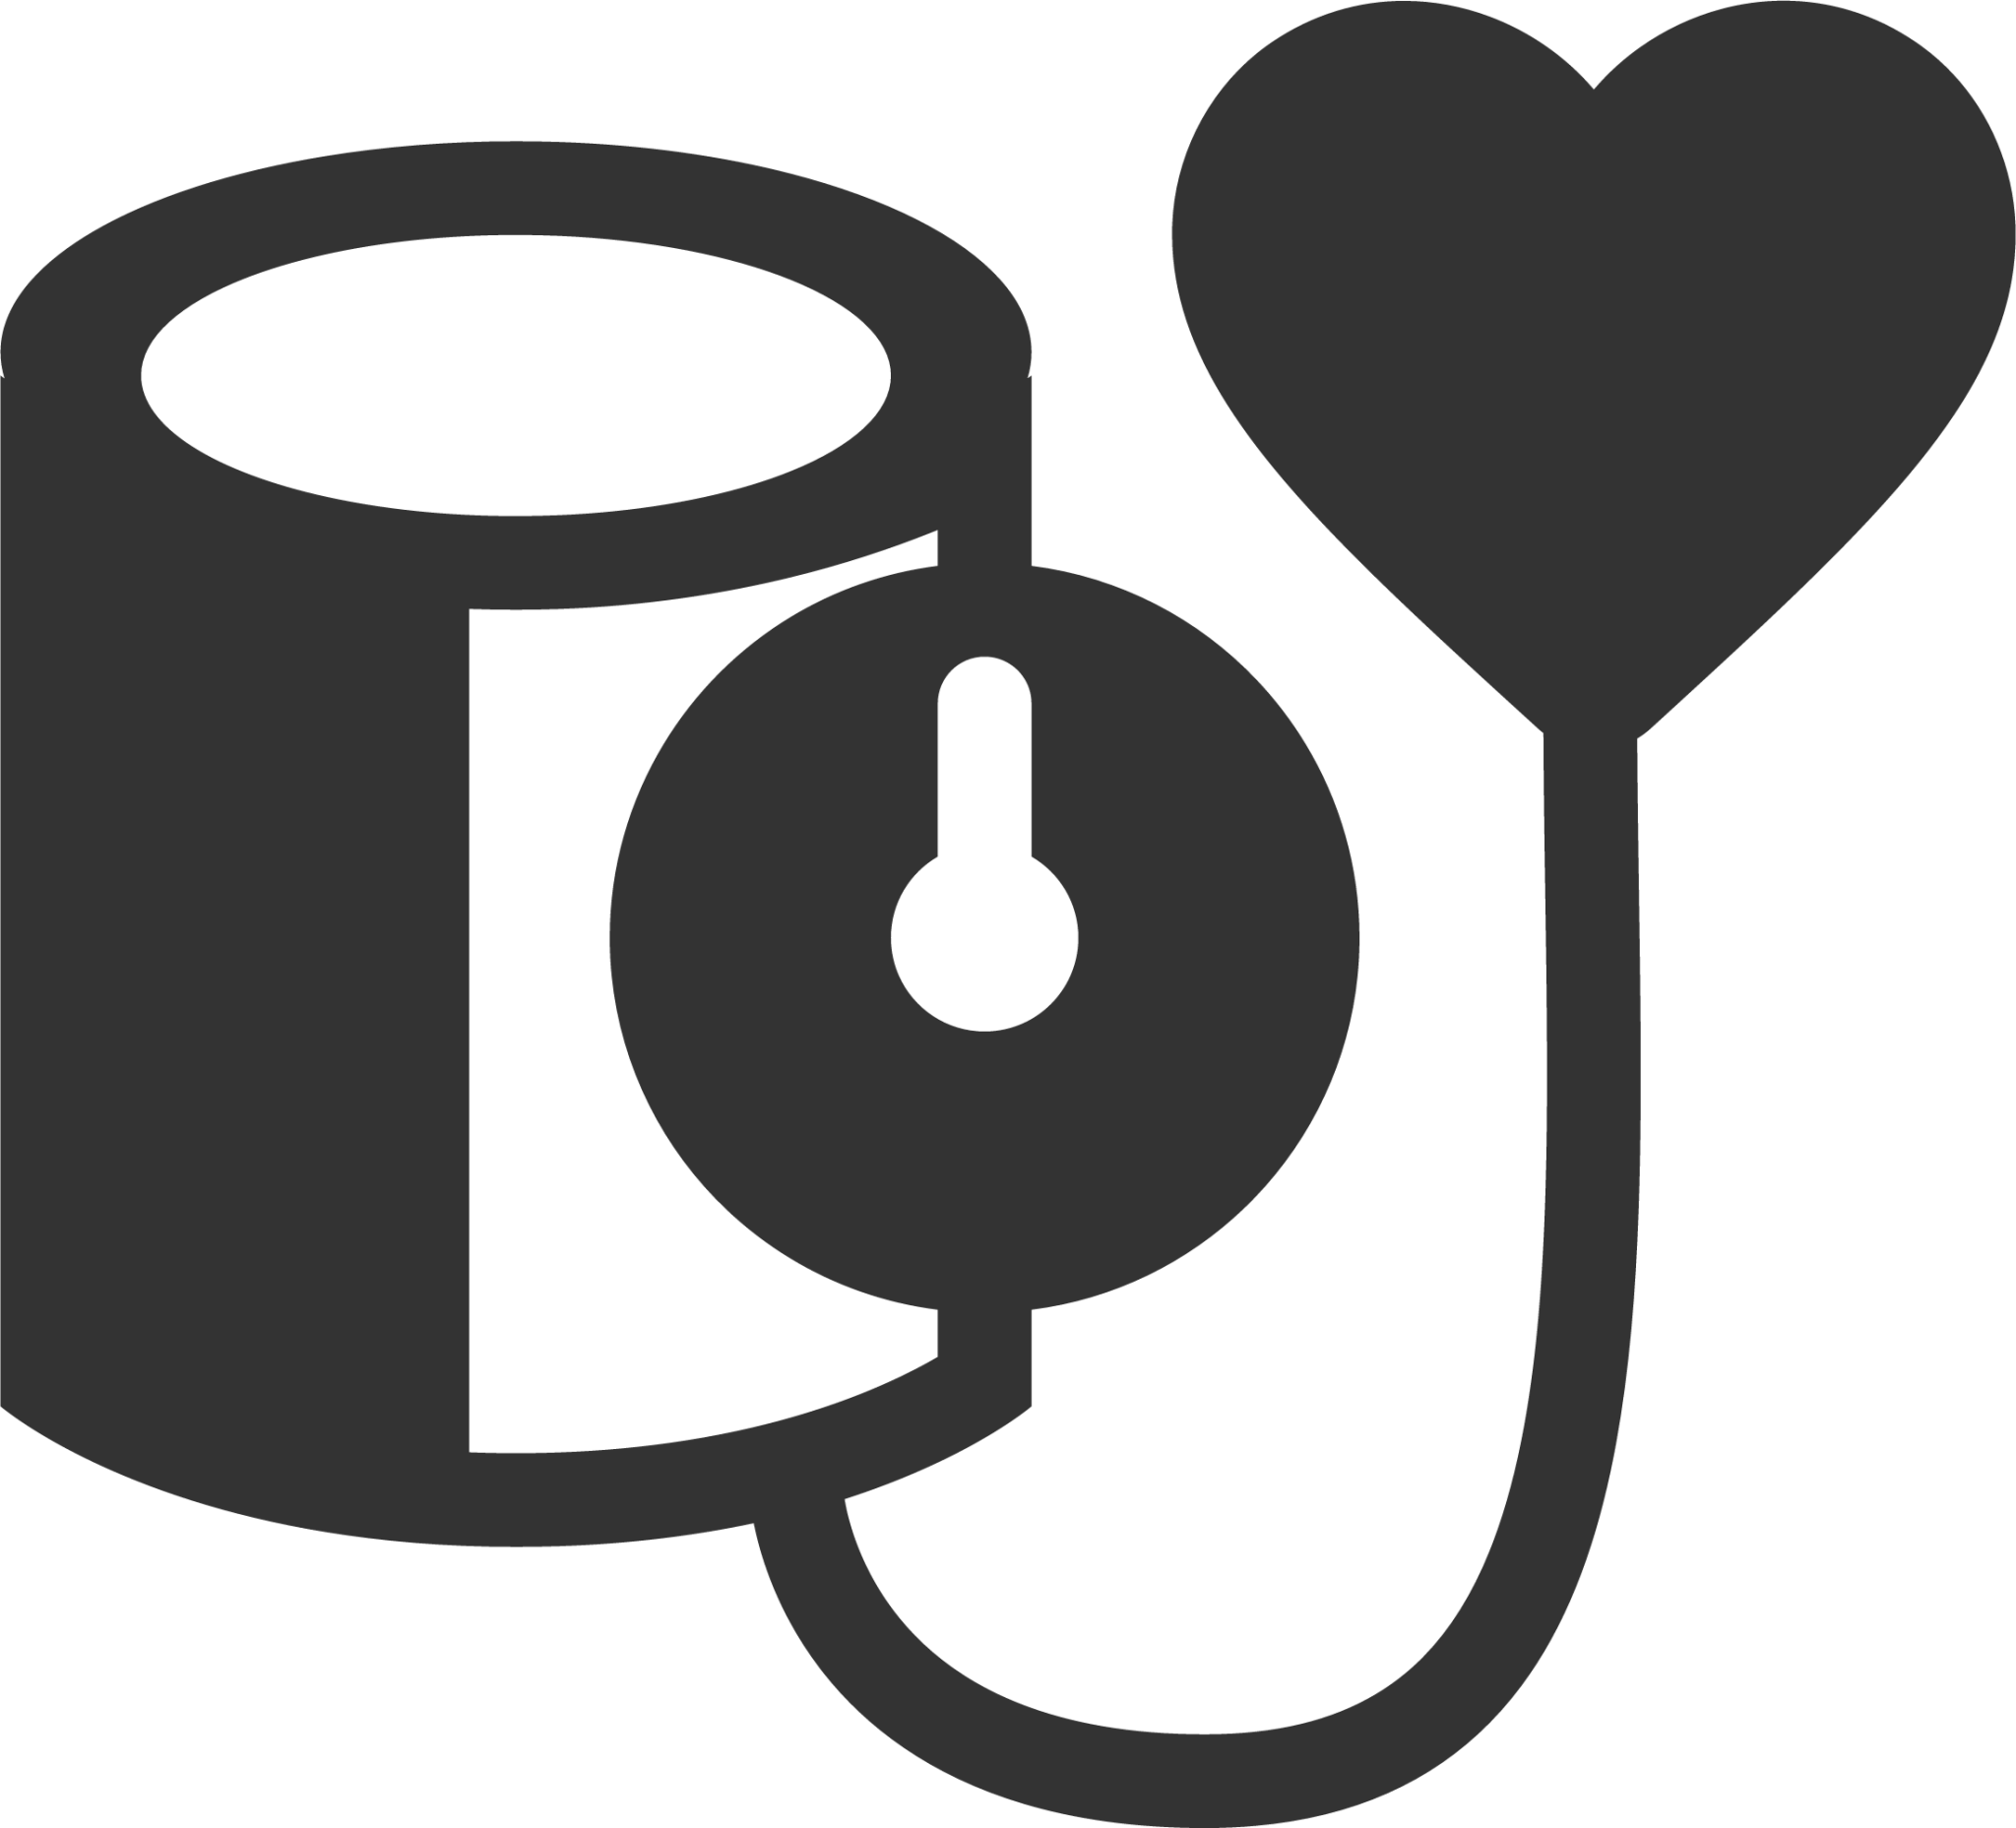 Blood Pressure Monitor ALT icon